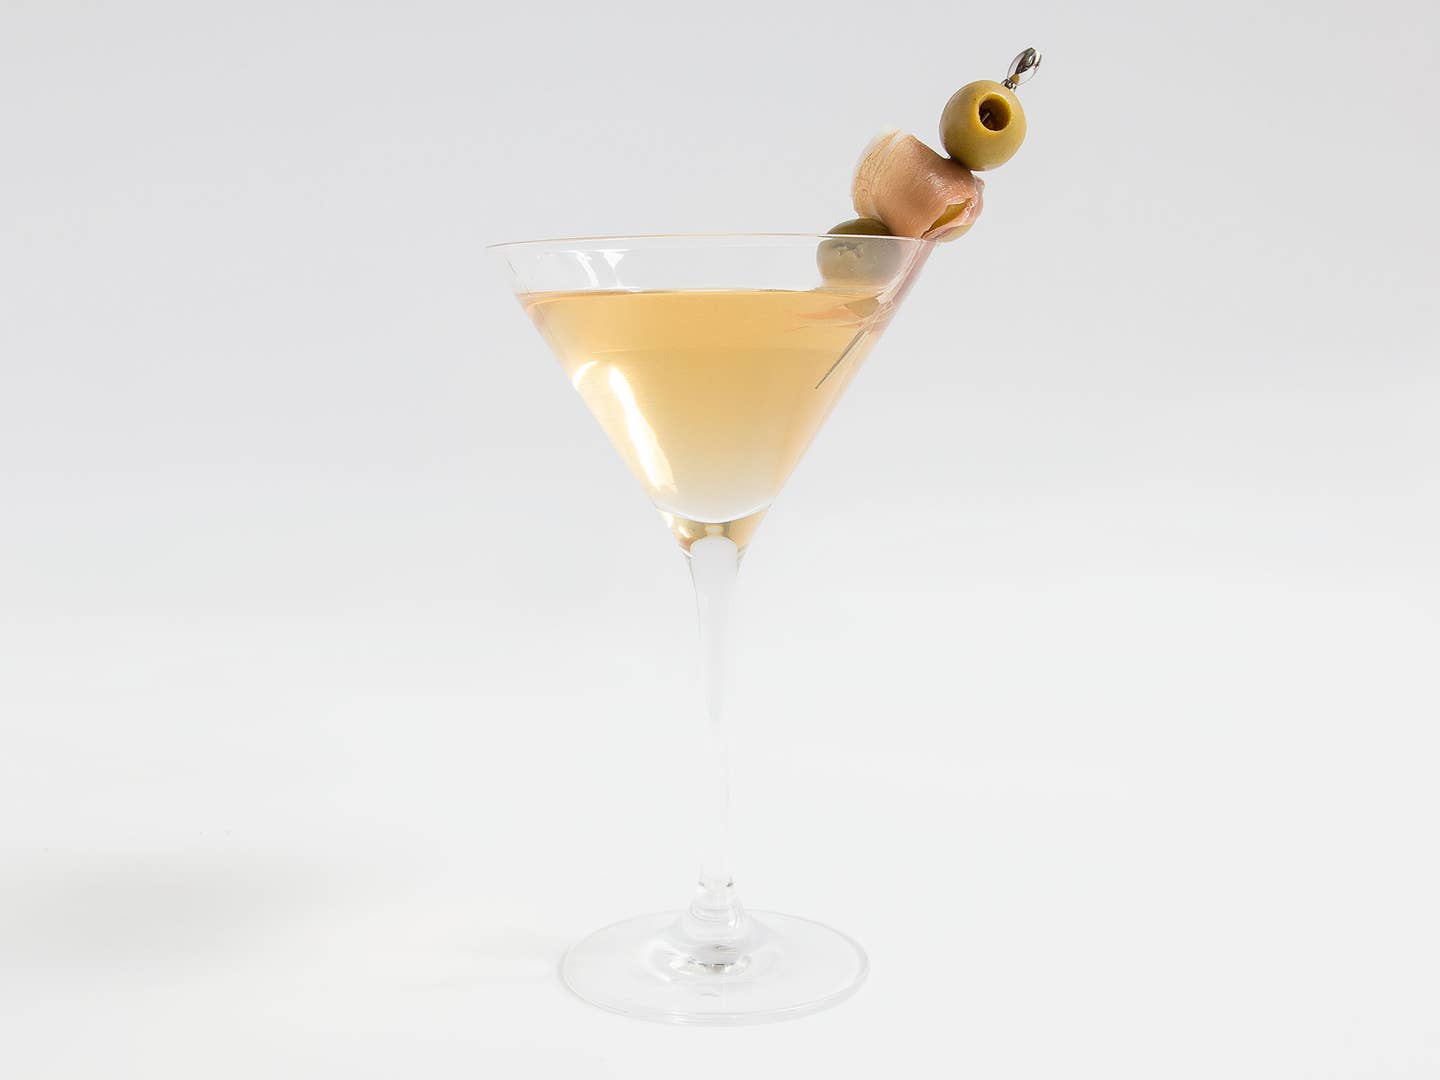 Festive Cocktails